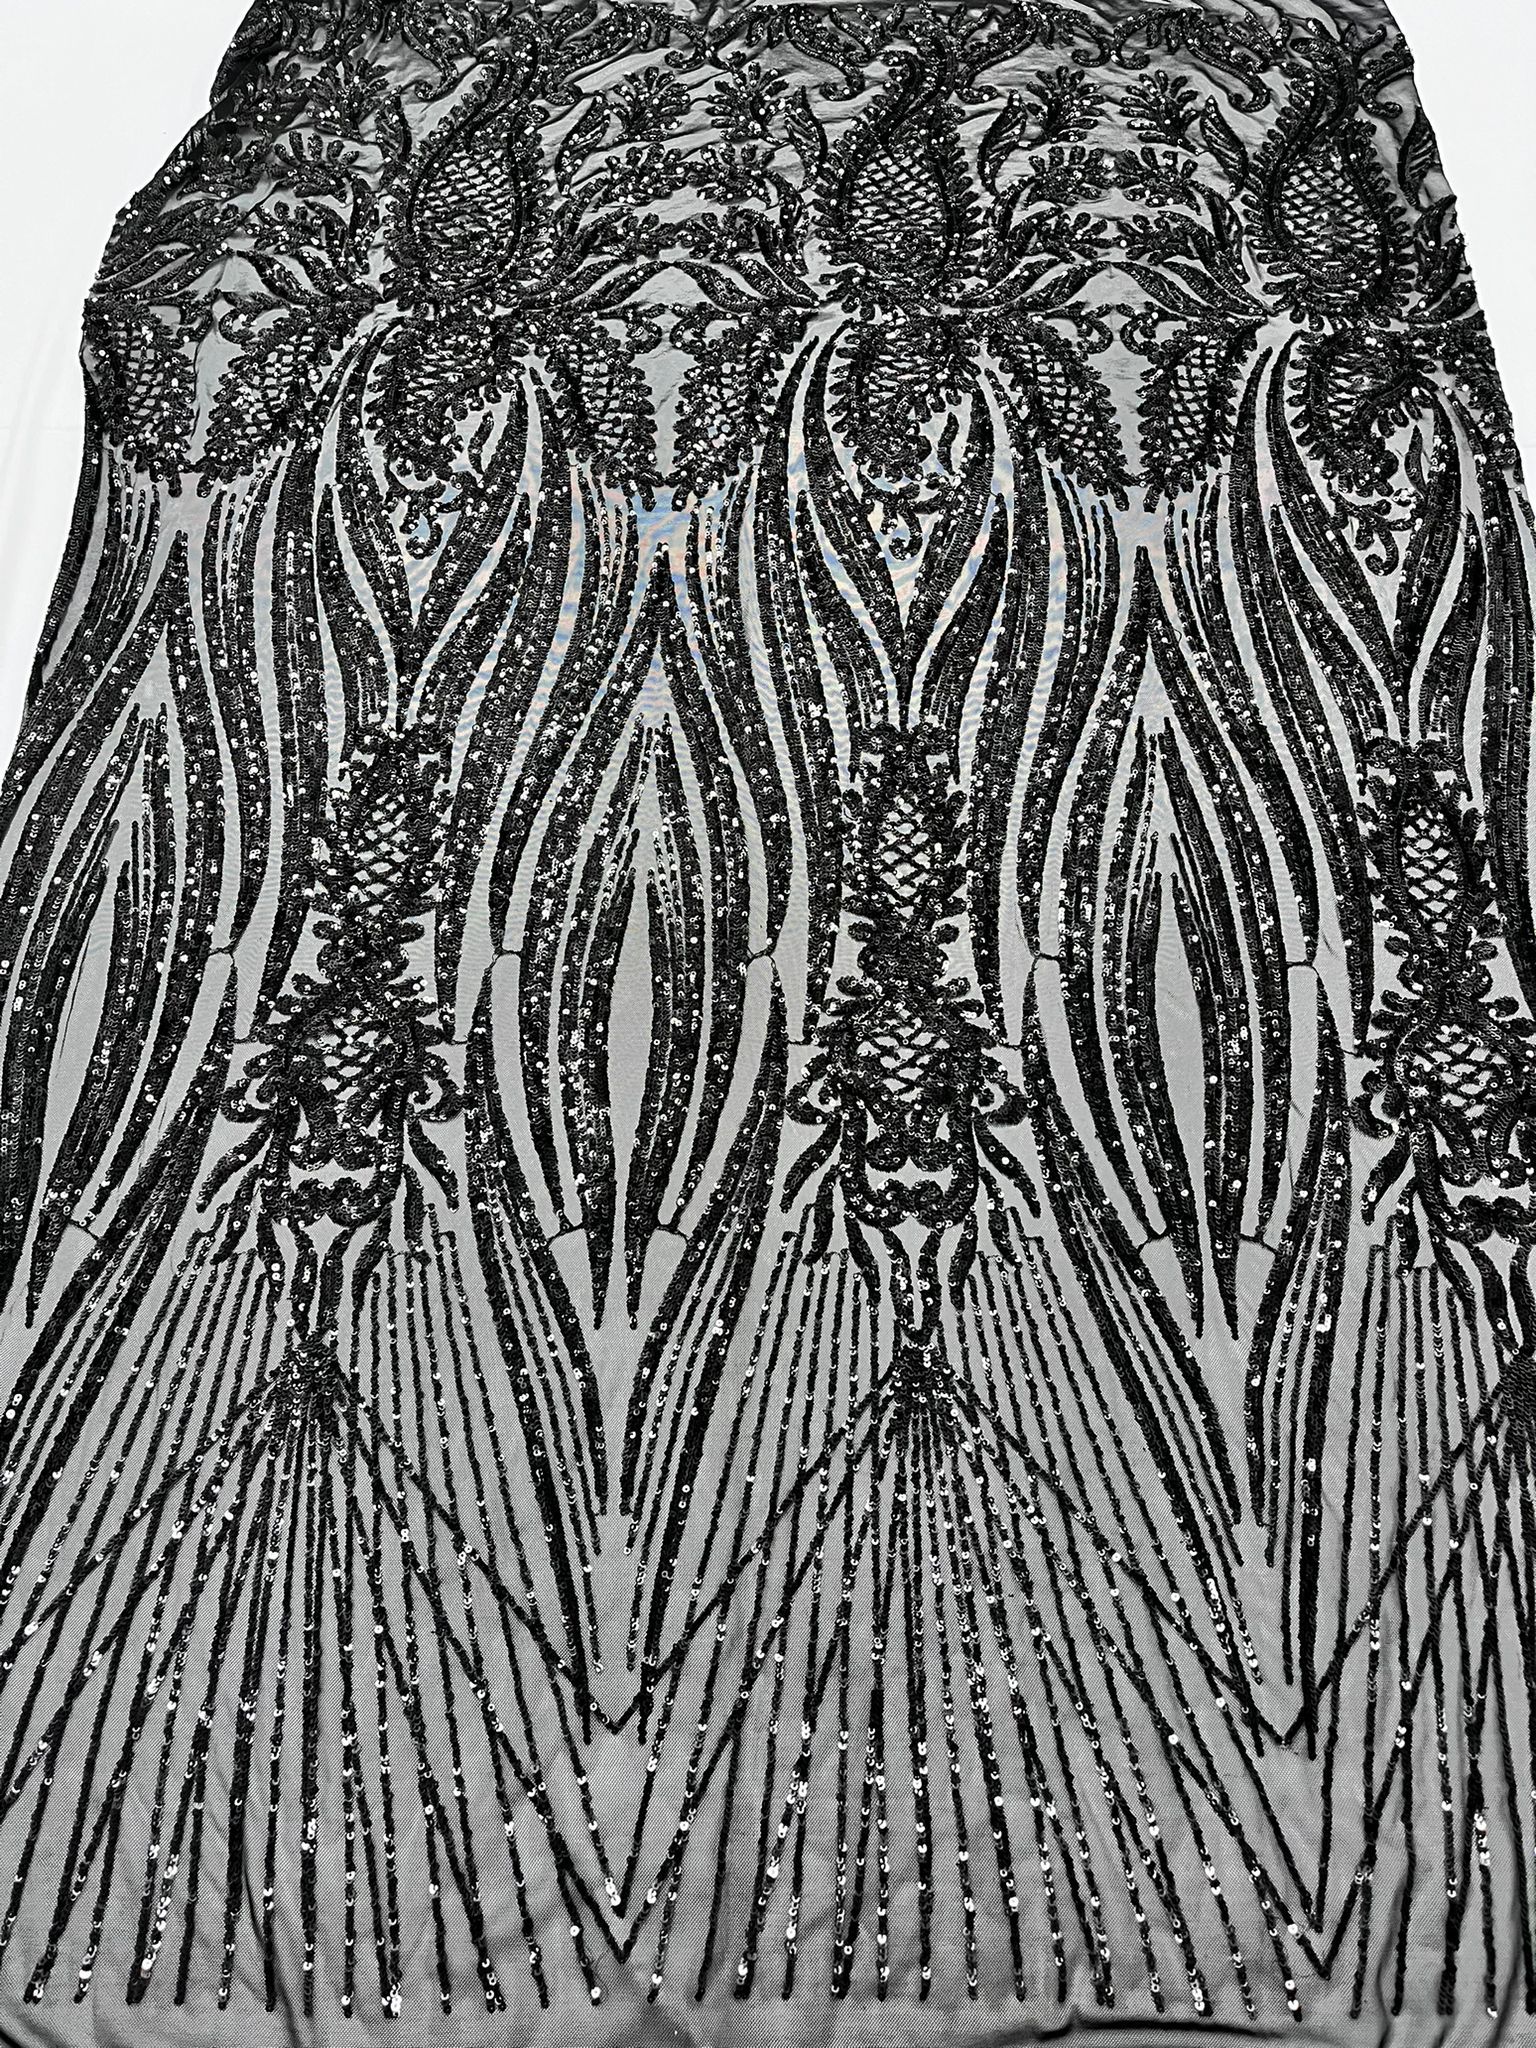 Geometric 4 Way Stretch Sequin Fabric | Black | Embroidered FabricICE FABRICSICE FABRICSSample (Swatch)Geometric 4 Way Stretch Sequin Fabric | Black | Embroidered Fabric ICE FABRICS